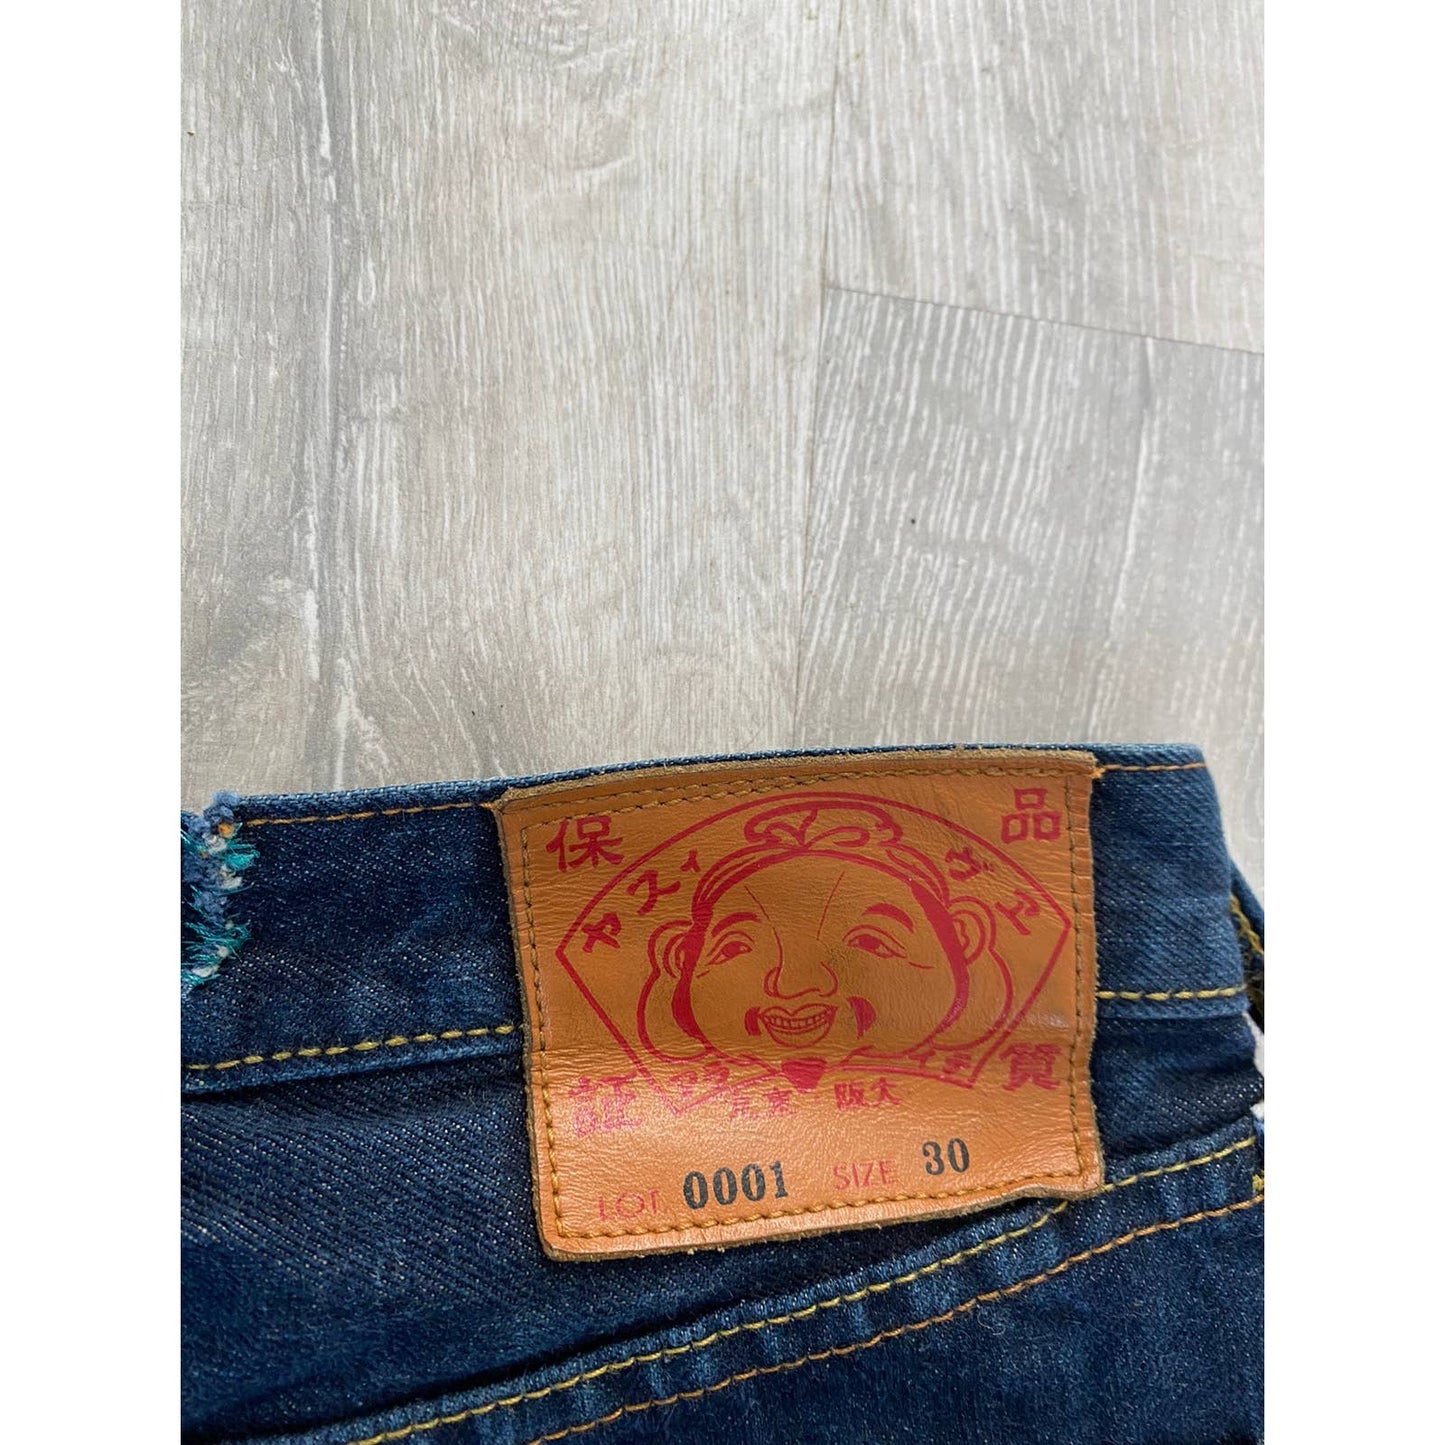 Evisu multipocket jeans multicolor vintage selvedge denim